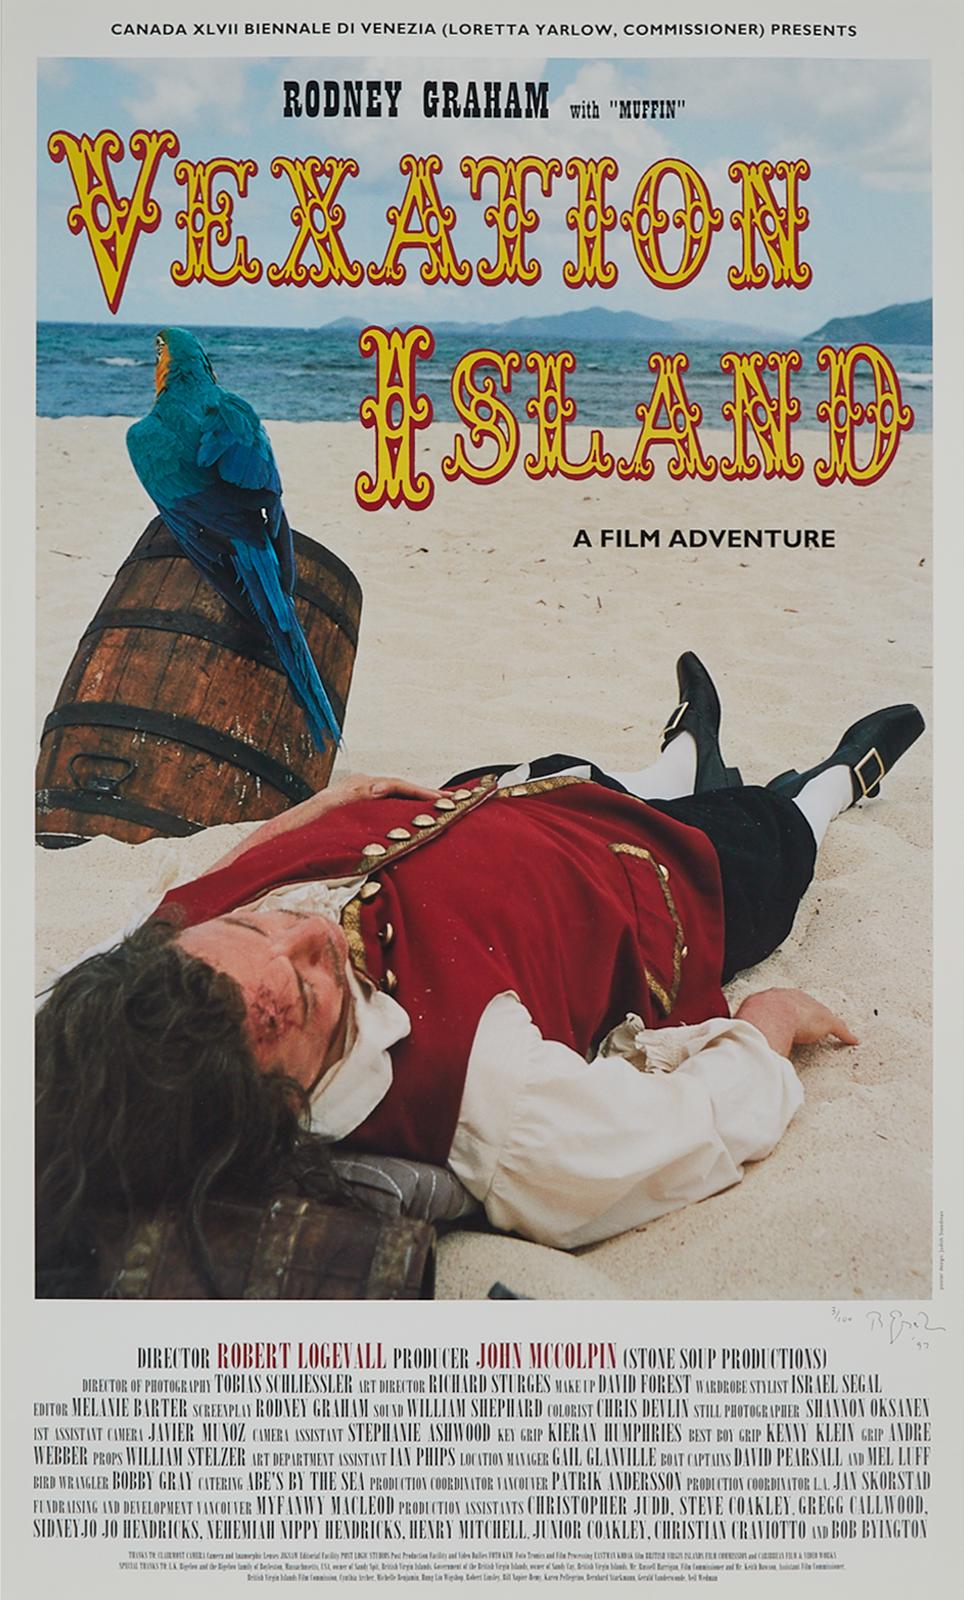 Rodney Graham (1949-2022) - Film Poster From Vexation Island, 1997